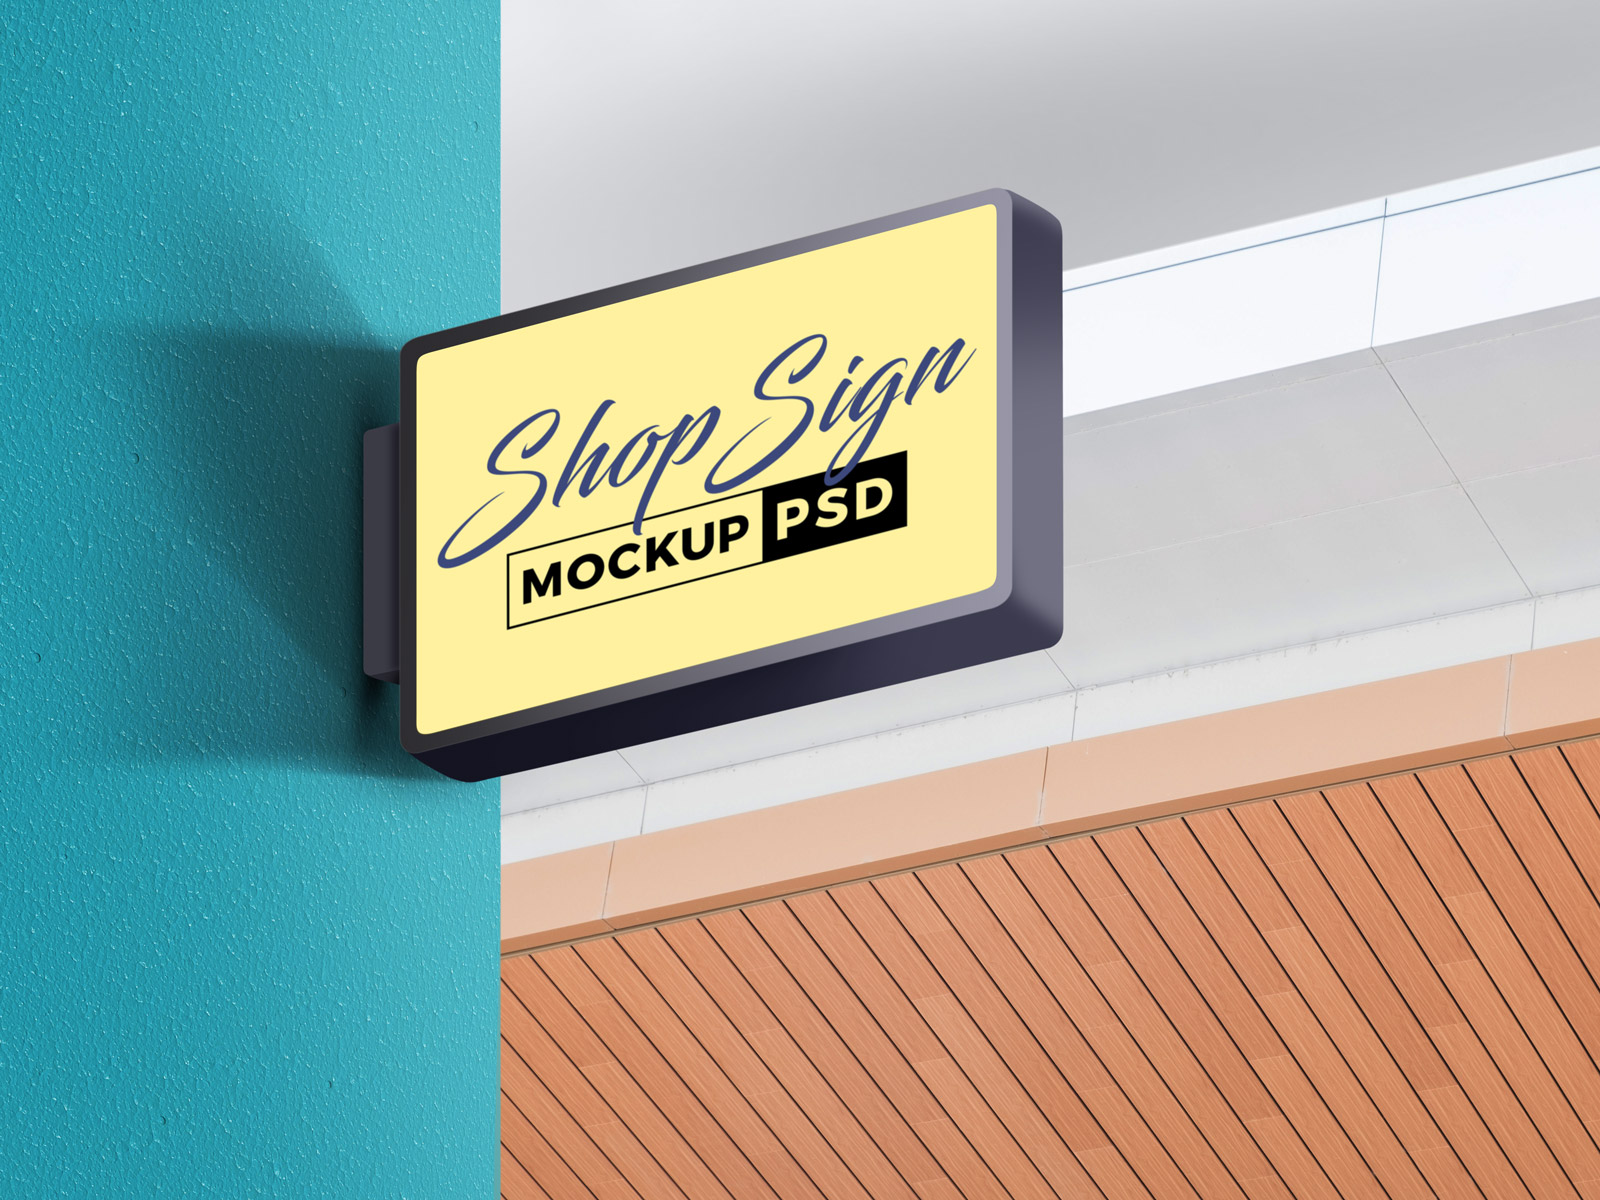 Free-Store-Wall-Mounted-Signage-Mockup-PSD